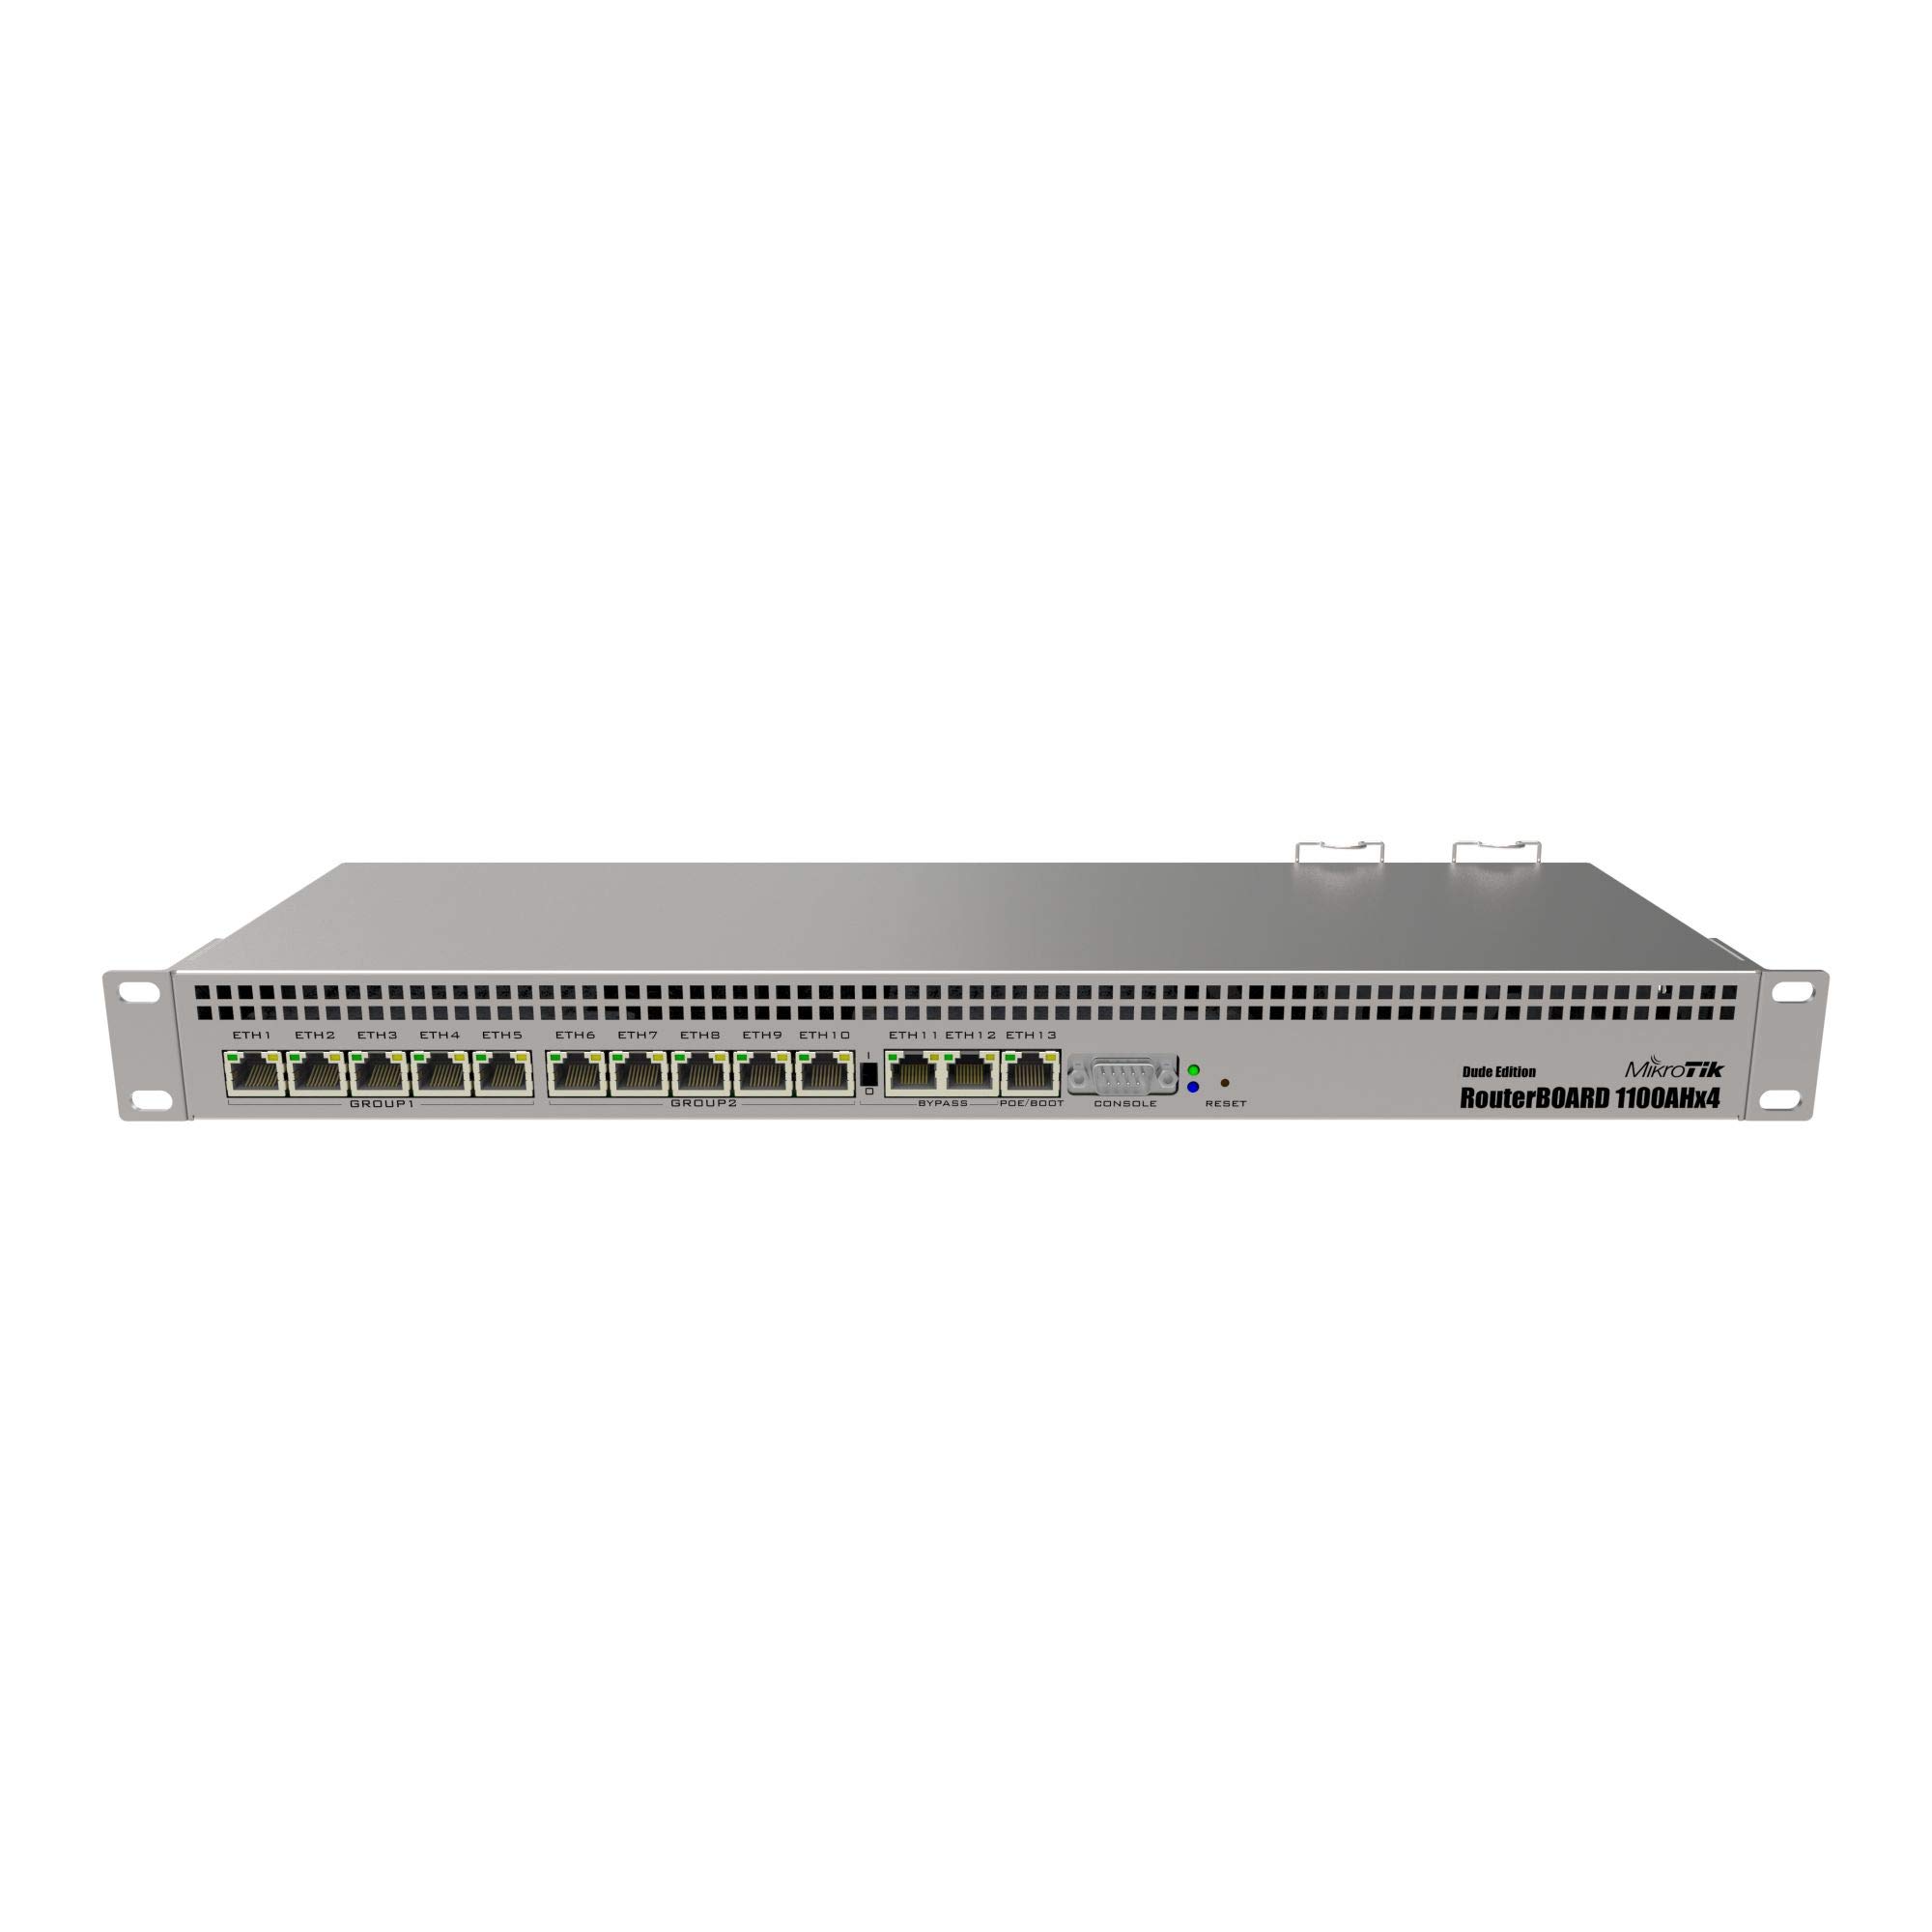 MikroTik RouterBOARD 1100AHx4 Dude Edition مع 13 منفذ جيجابت إيثرنت ومنفذ تسلسلي RS232 وإمدادات طاقة احتياطية مزدوجة (RB1100AHx4)